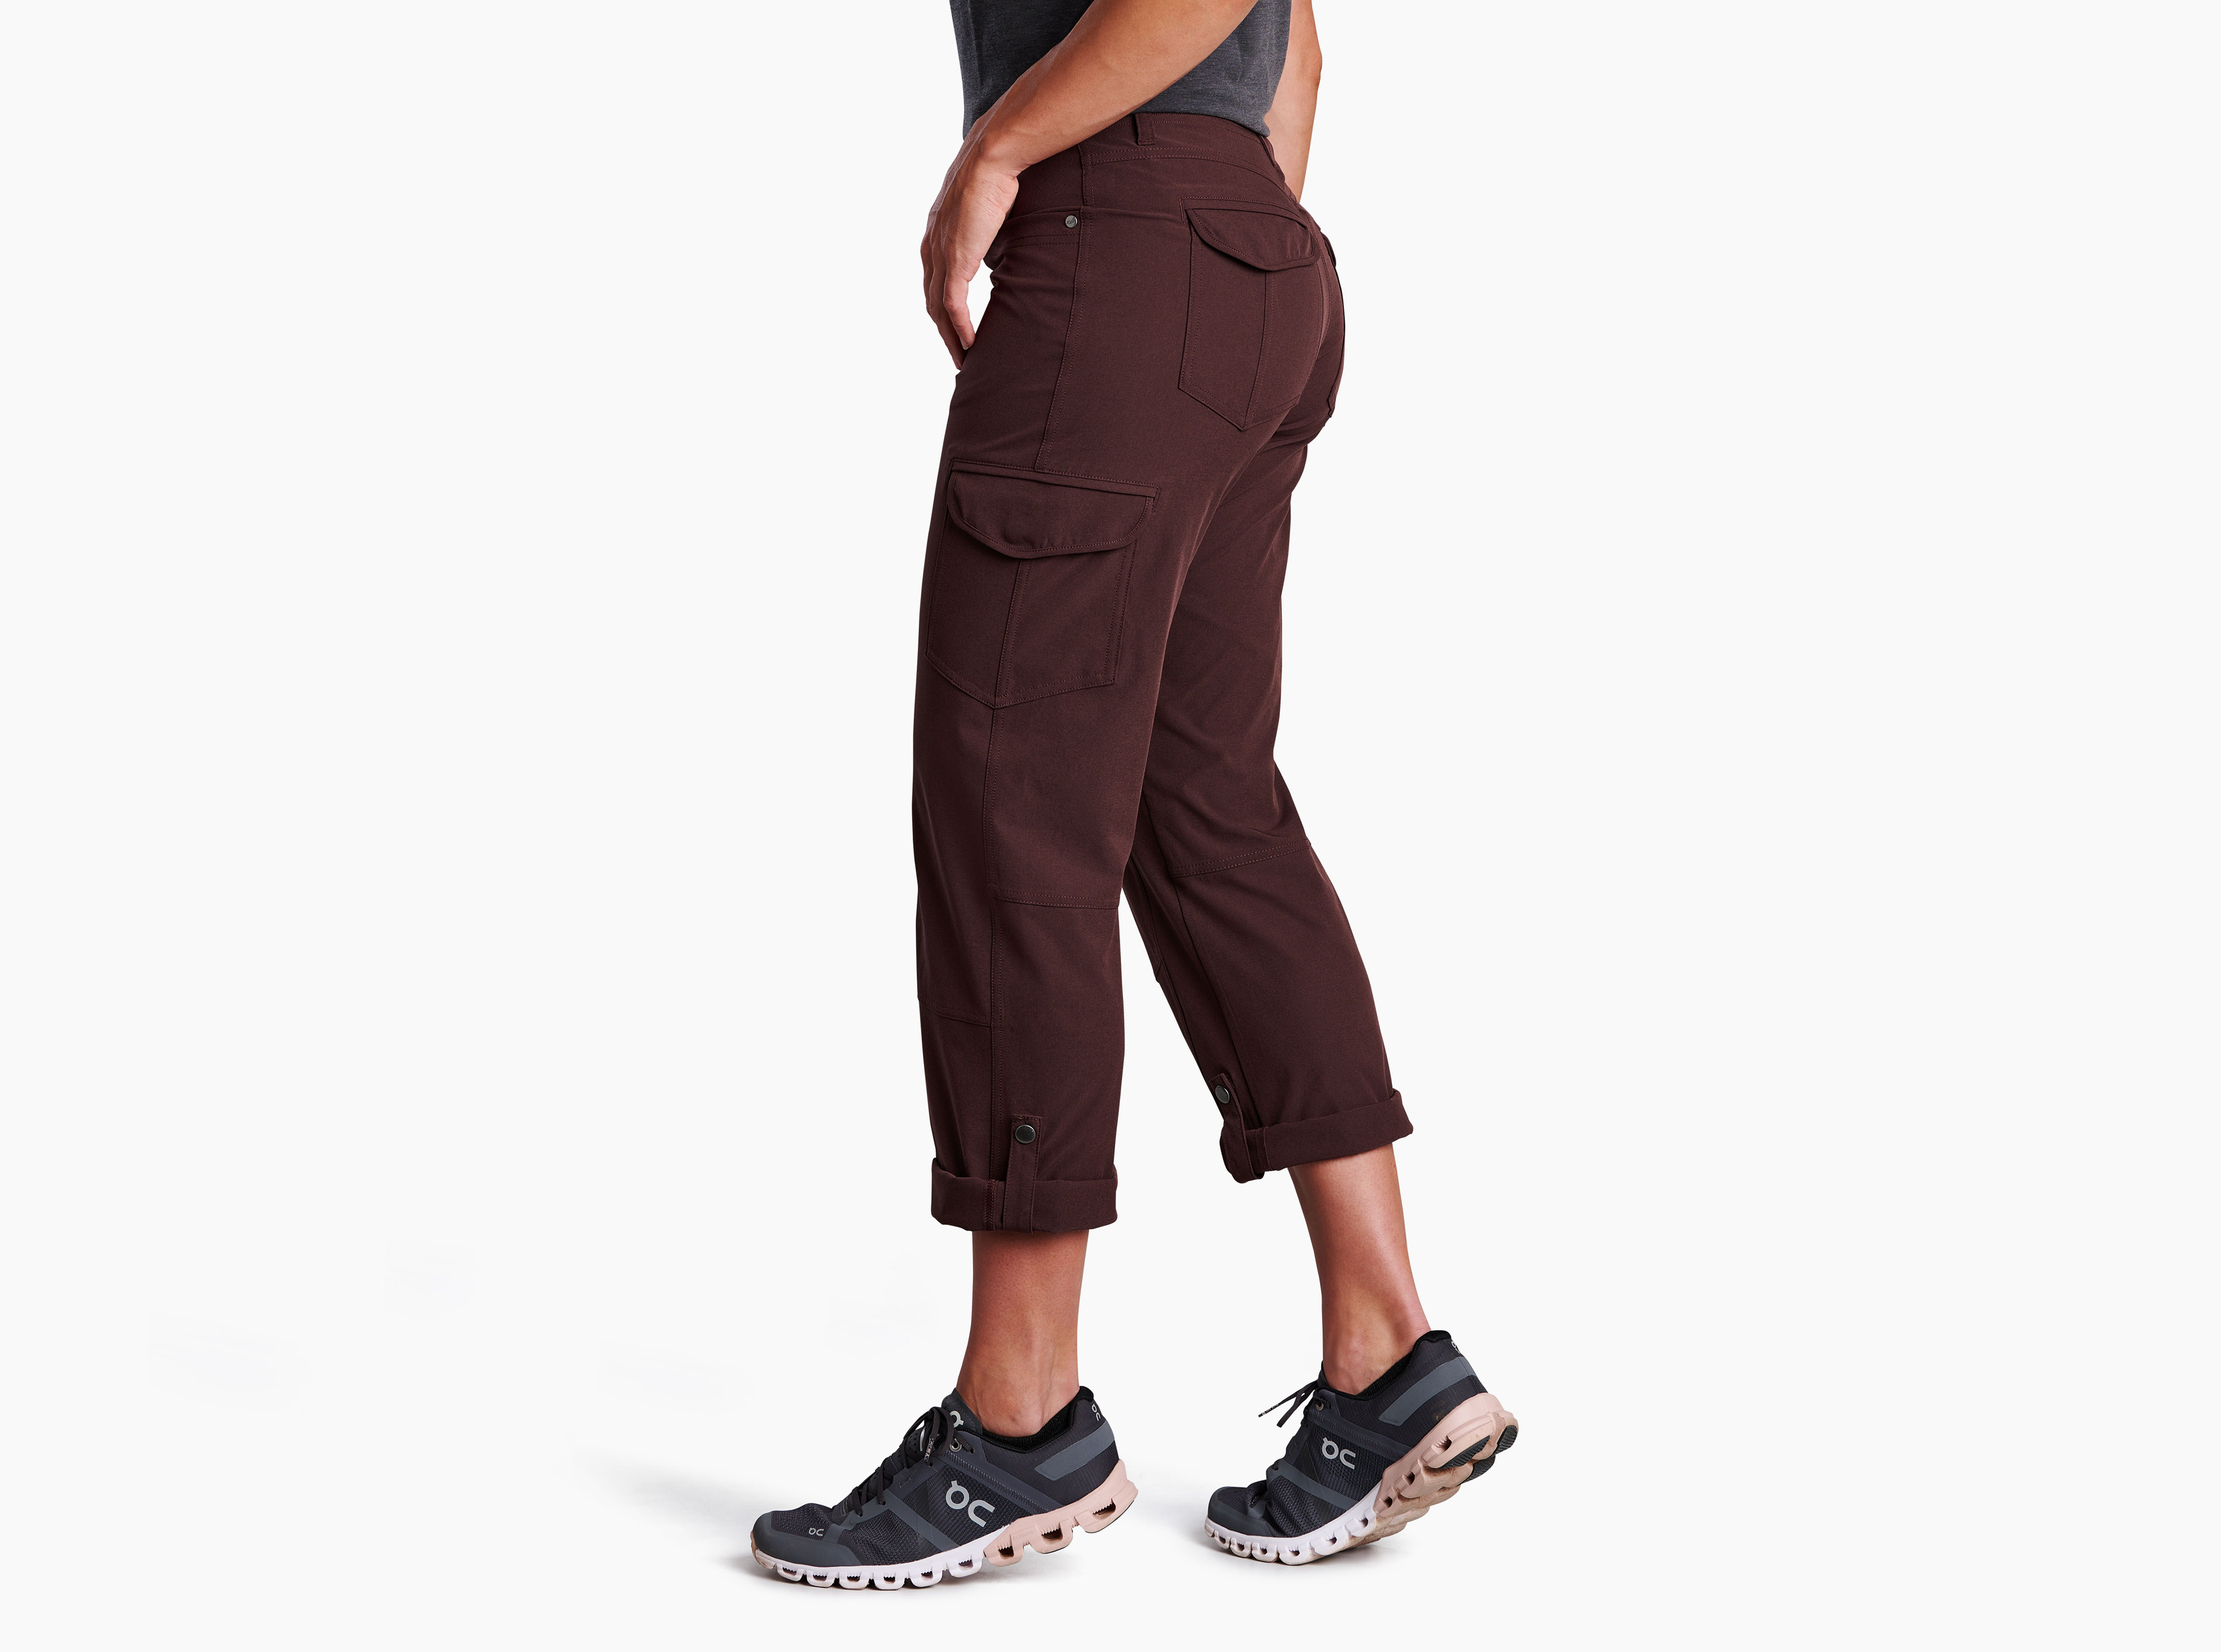 Splash™ Roll-Up Pant in Women's Pants, KÜHL Clothing